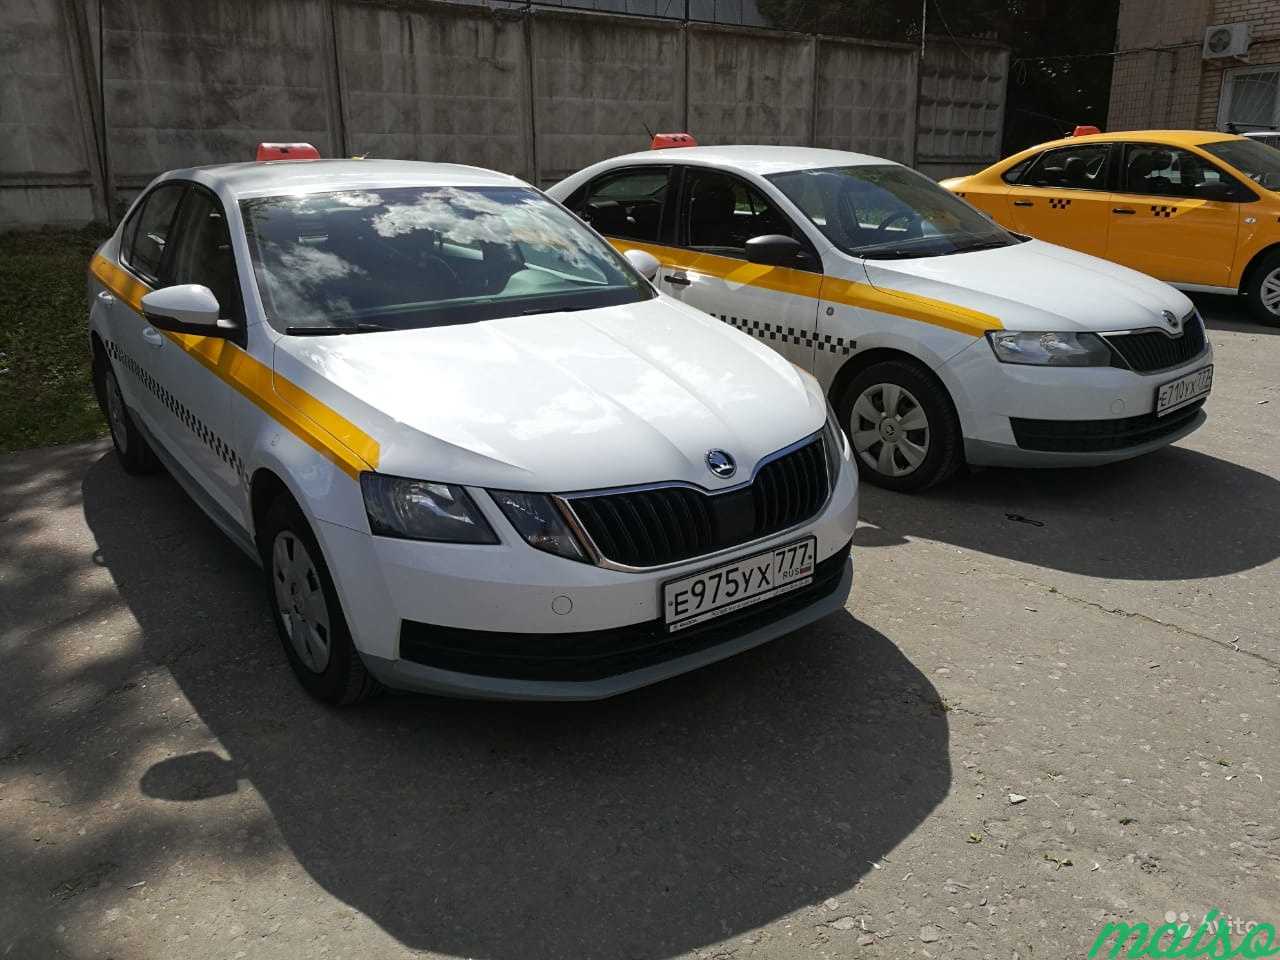 Аренда авто такси минск. Машина под такси без залога. Такси Украина. Украинское такси. Шкода Рапид такси.